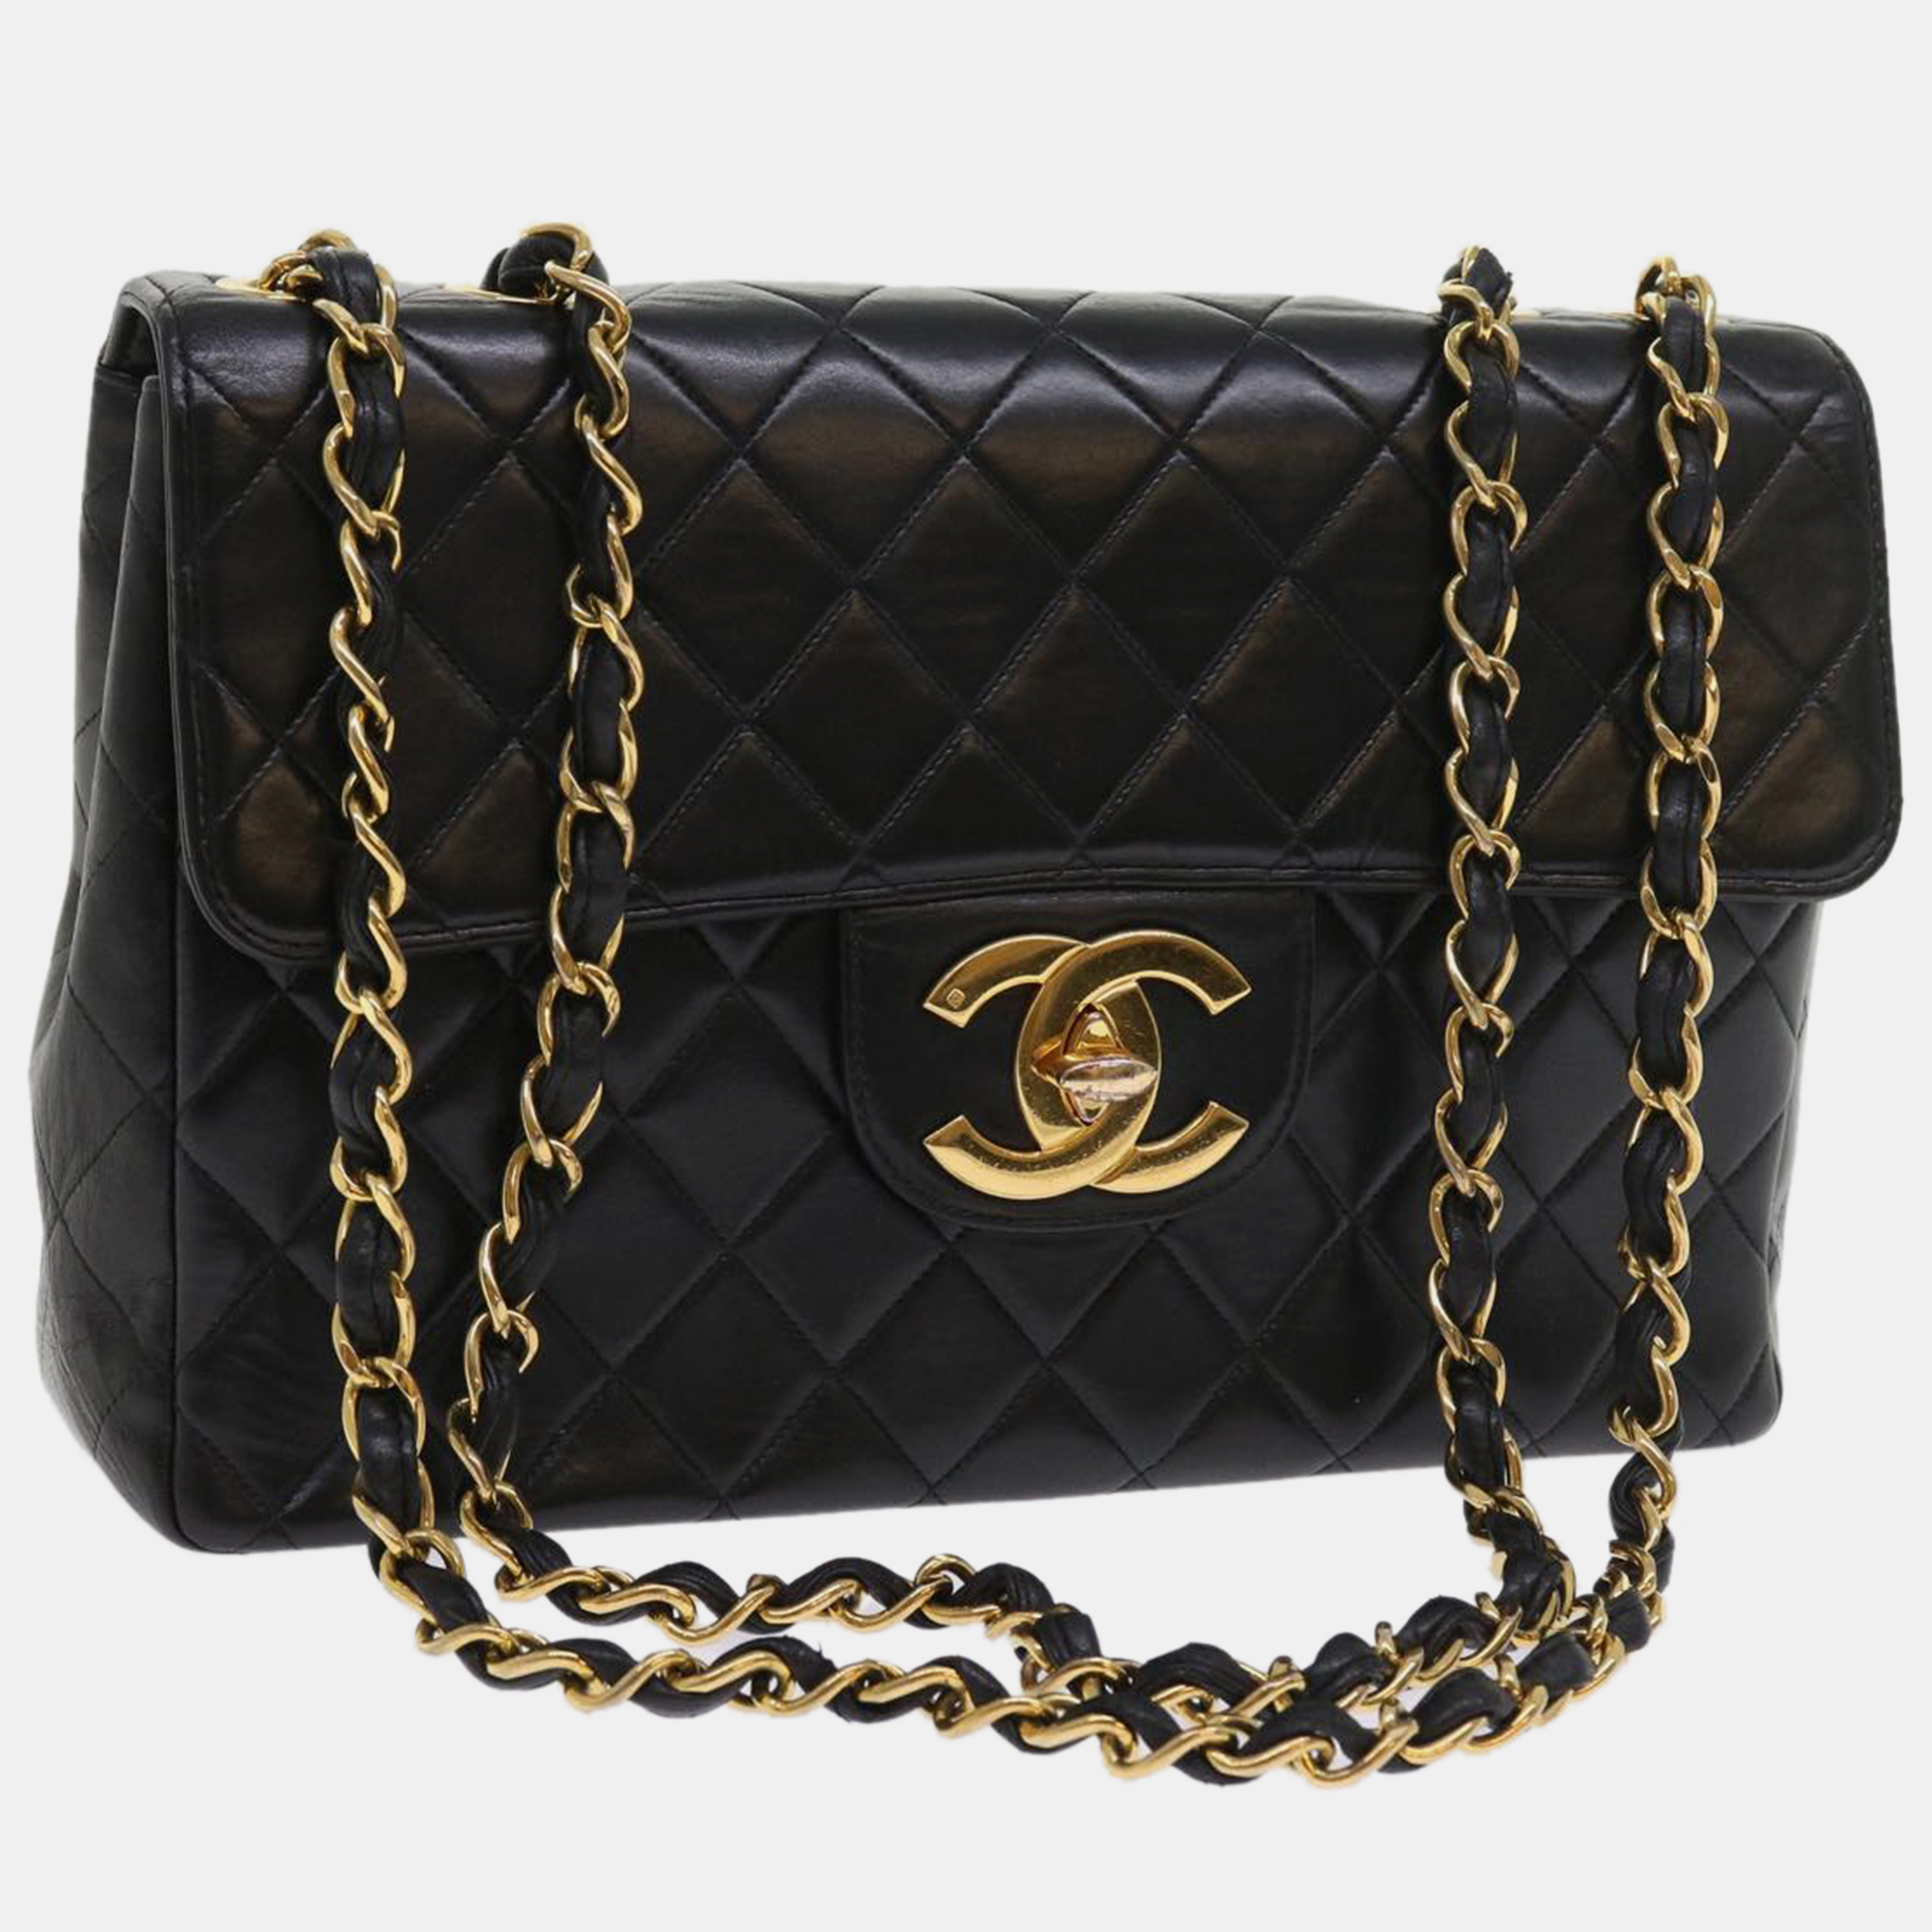 Chanel black leather classic flap bag